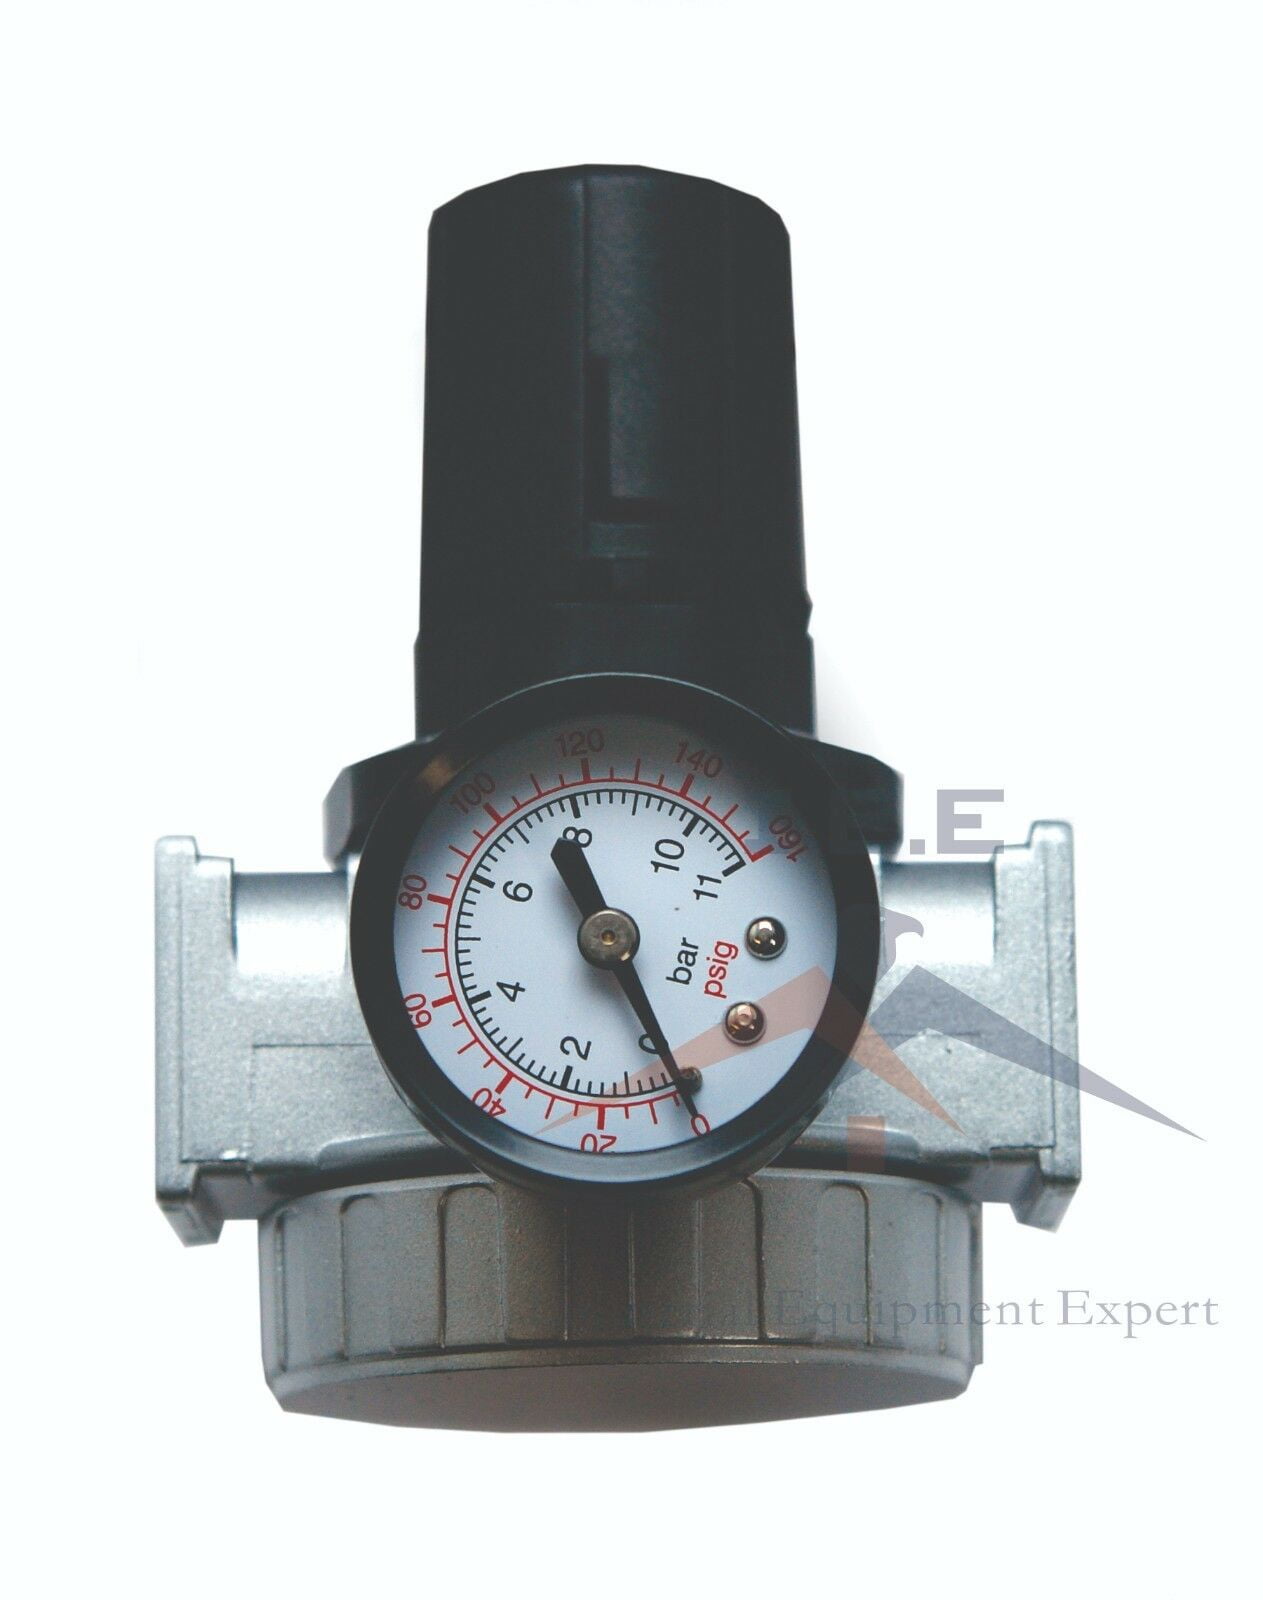 Air Pressure Regulator for compressor compressed air 1/2" & free gauge 